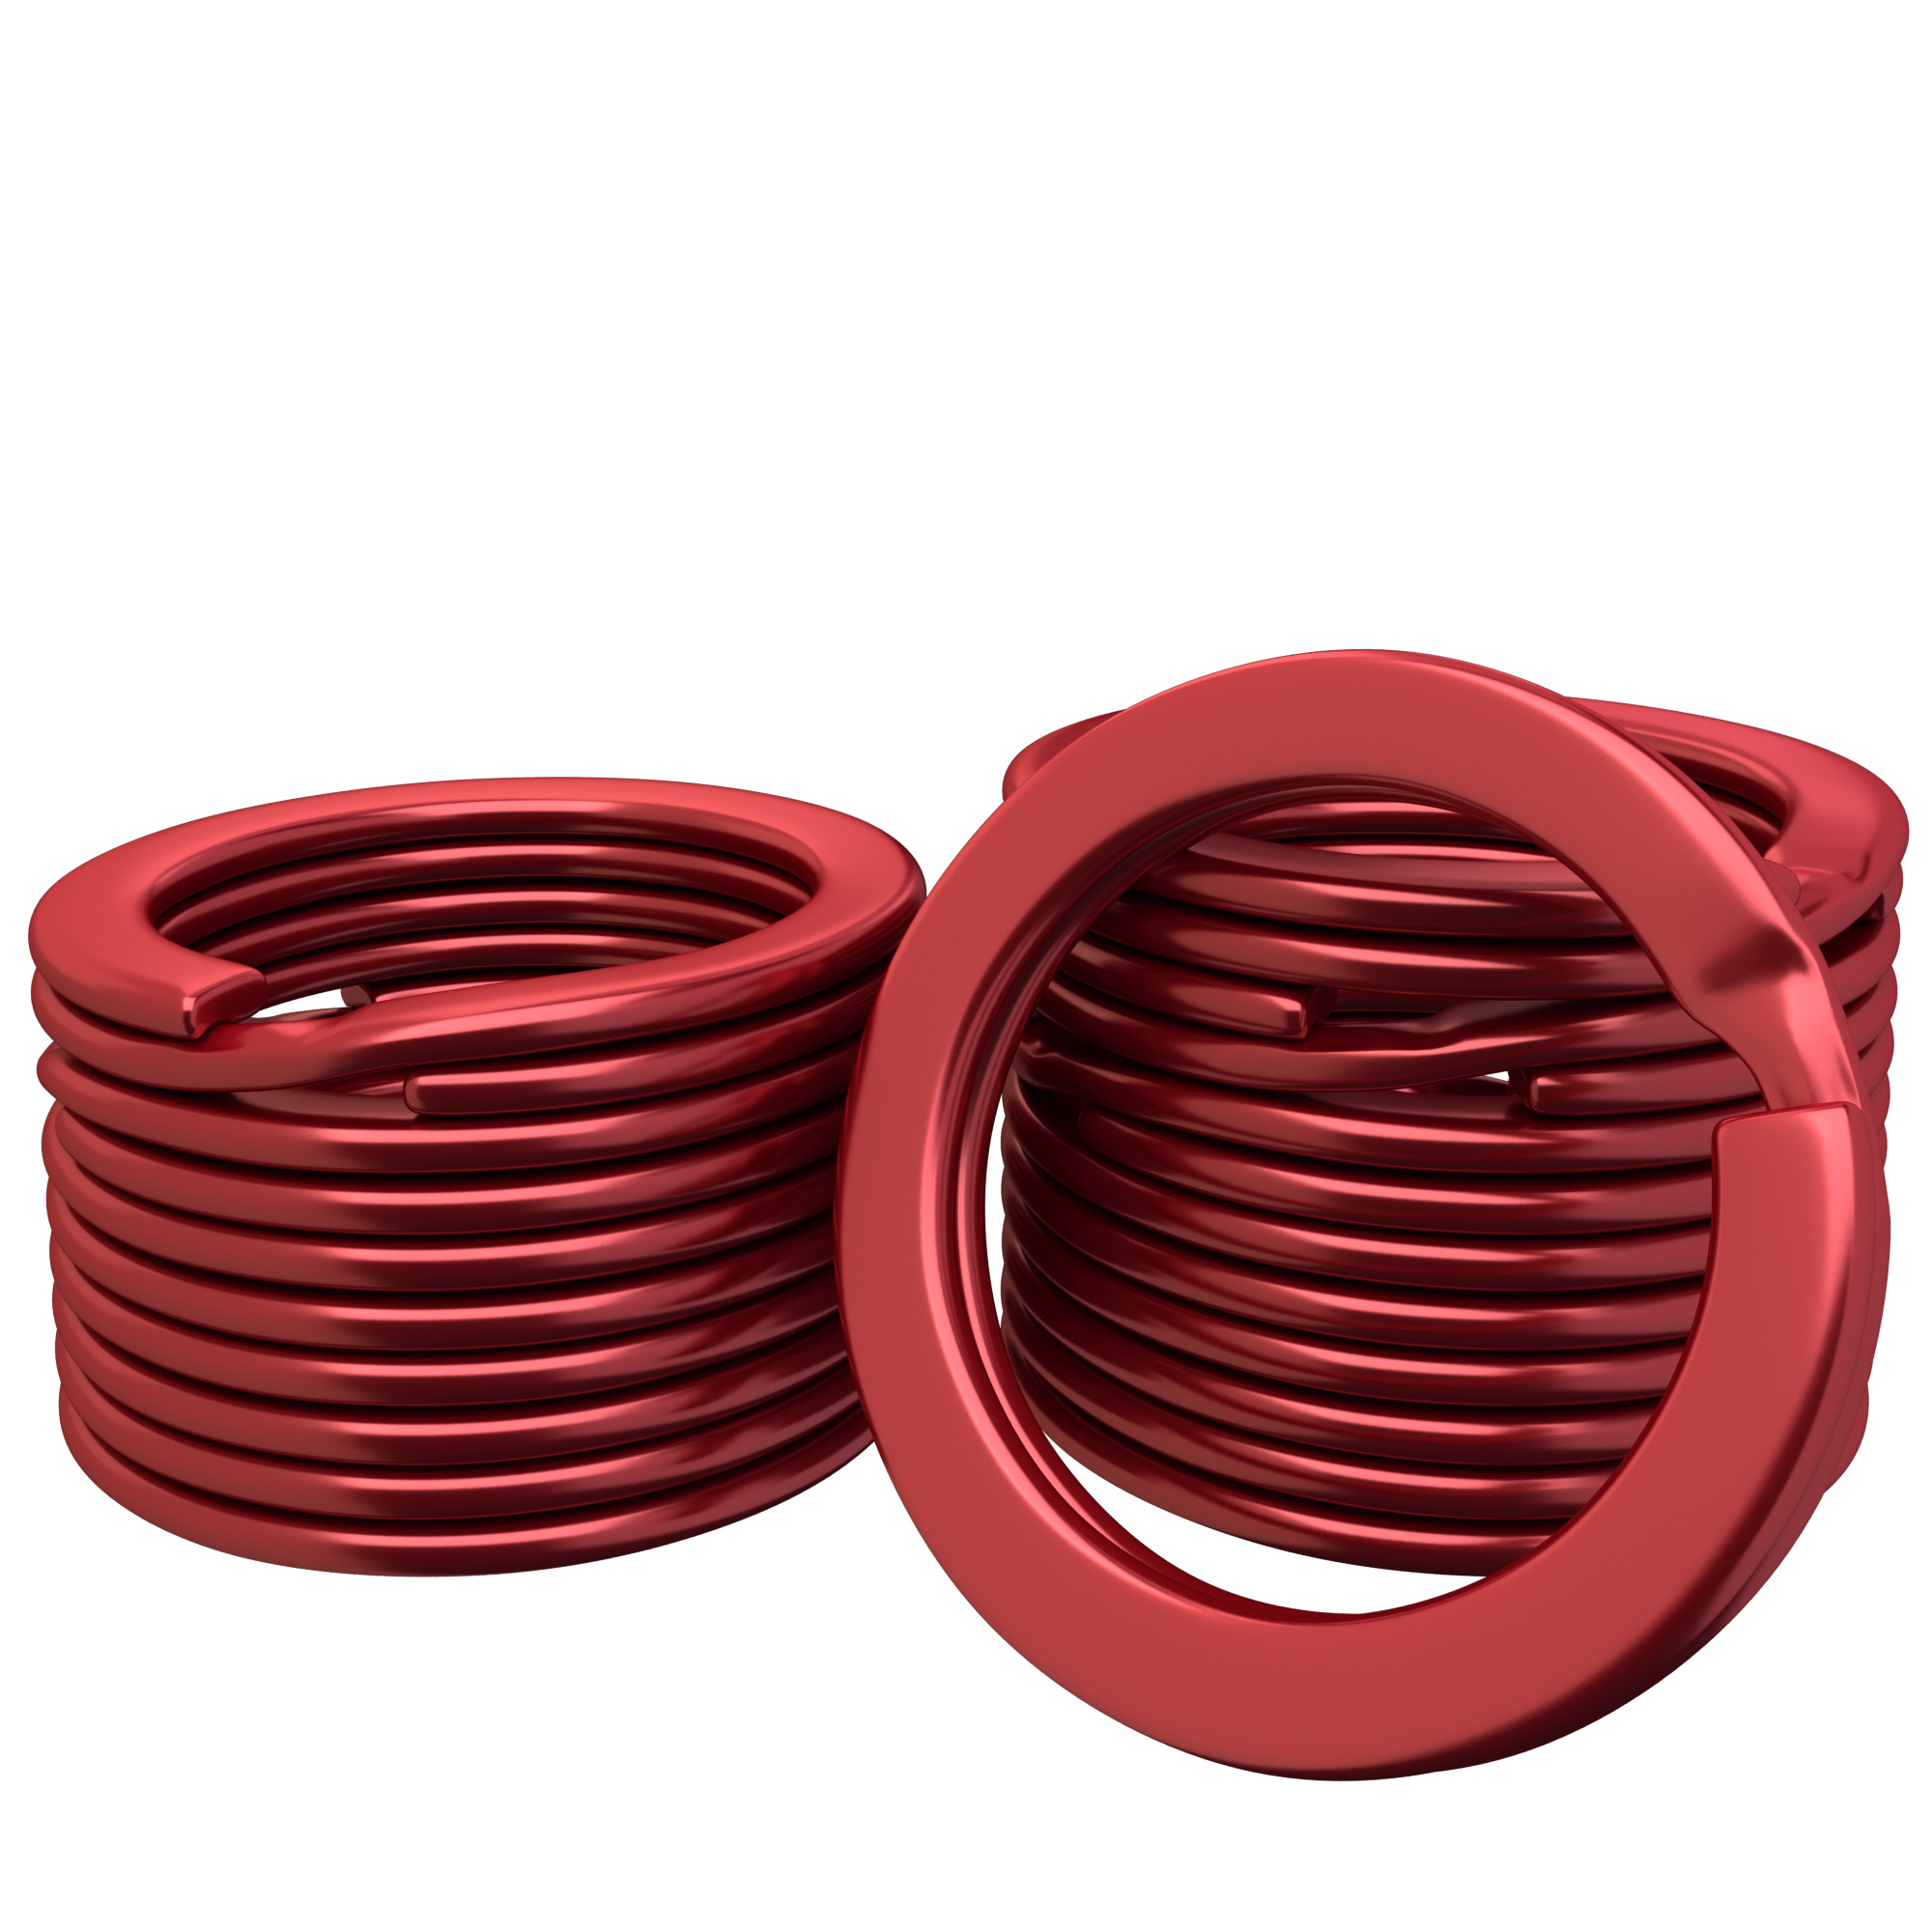 0.8" METAL SPLIT KEY RINGS PVD COATED(12PCS, RED COLOR)